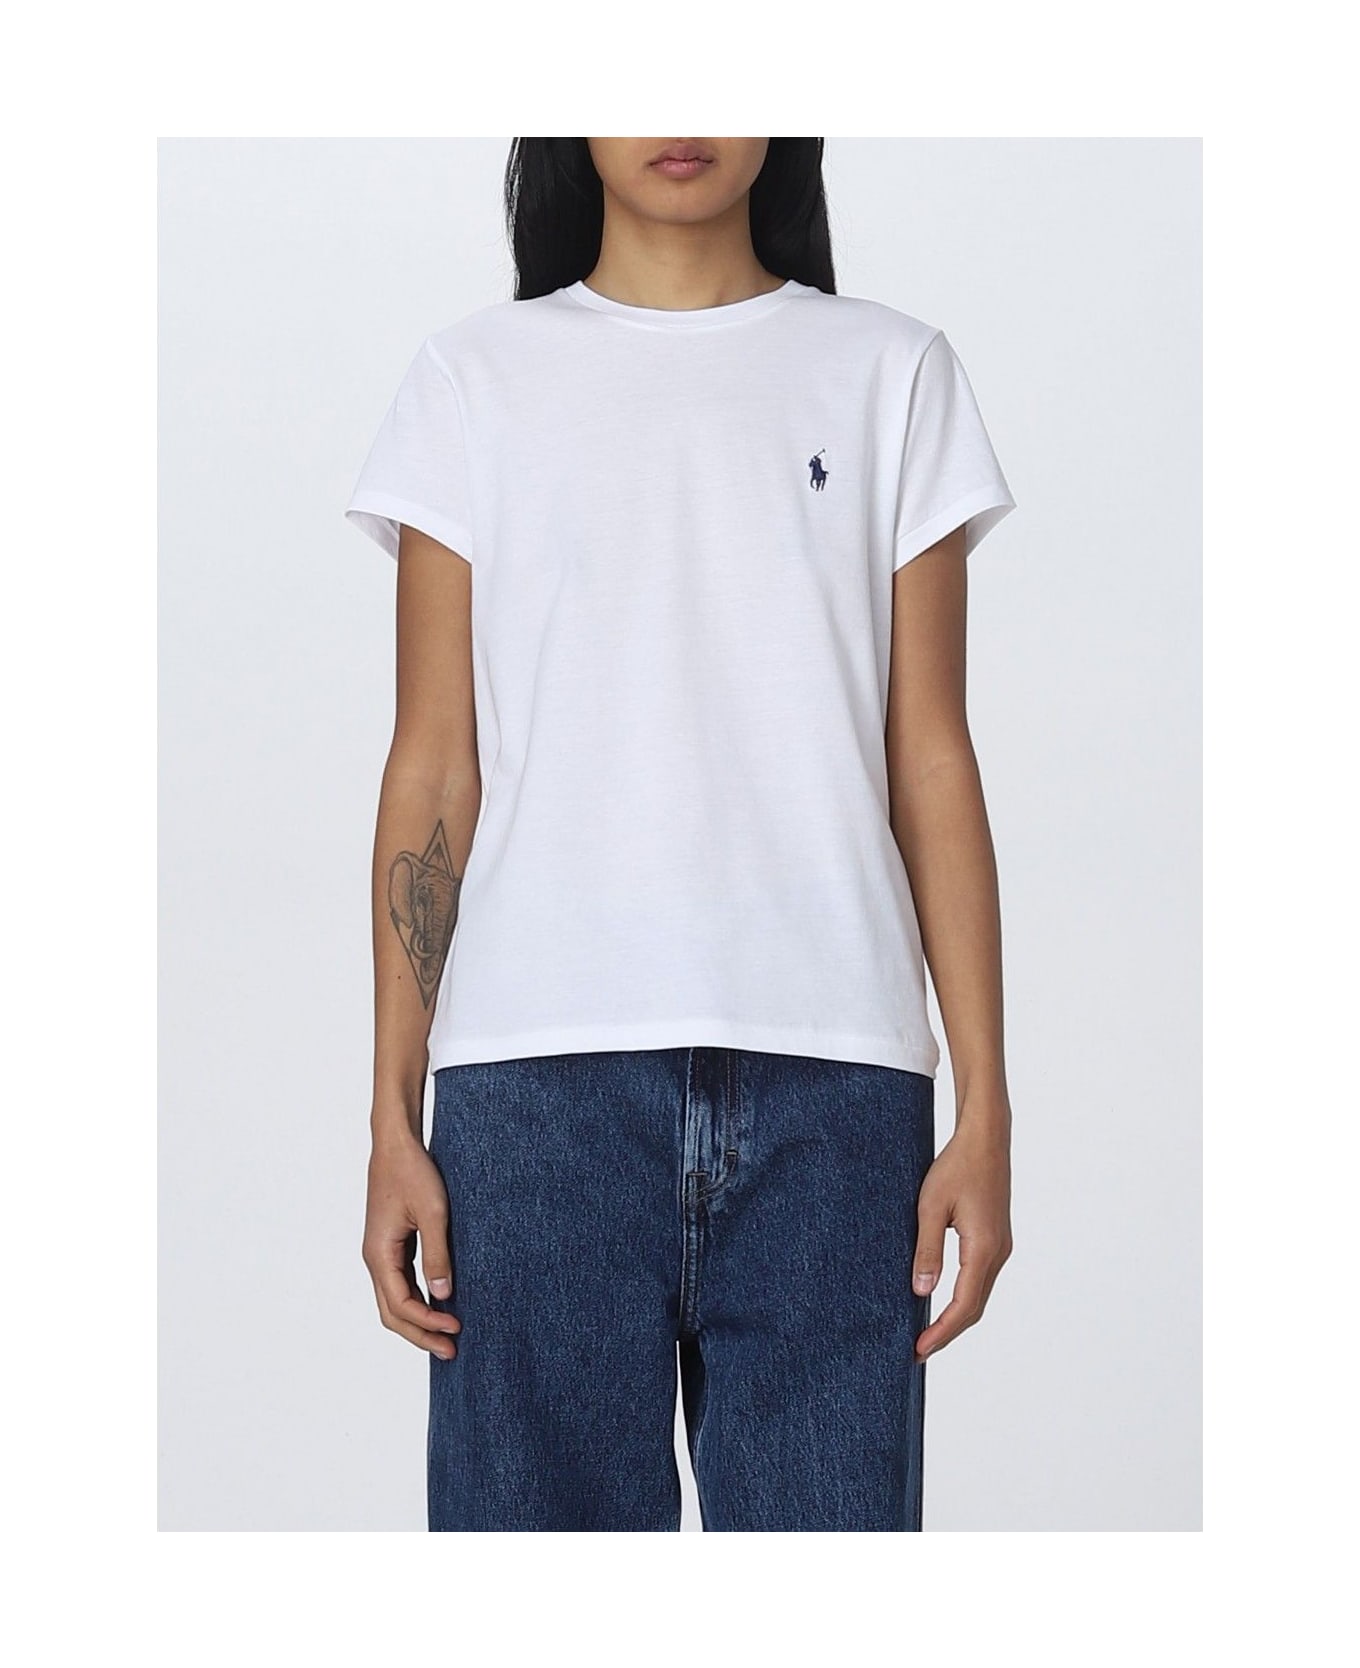 Polo Ralph Lauren T-shirt - Bianco